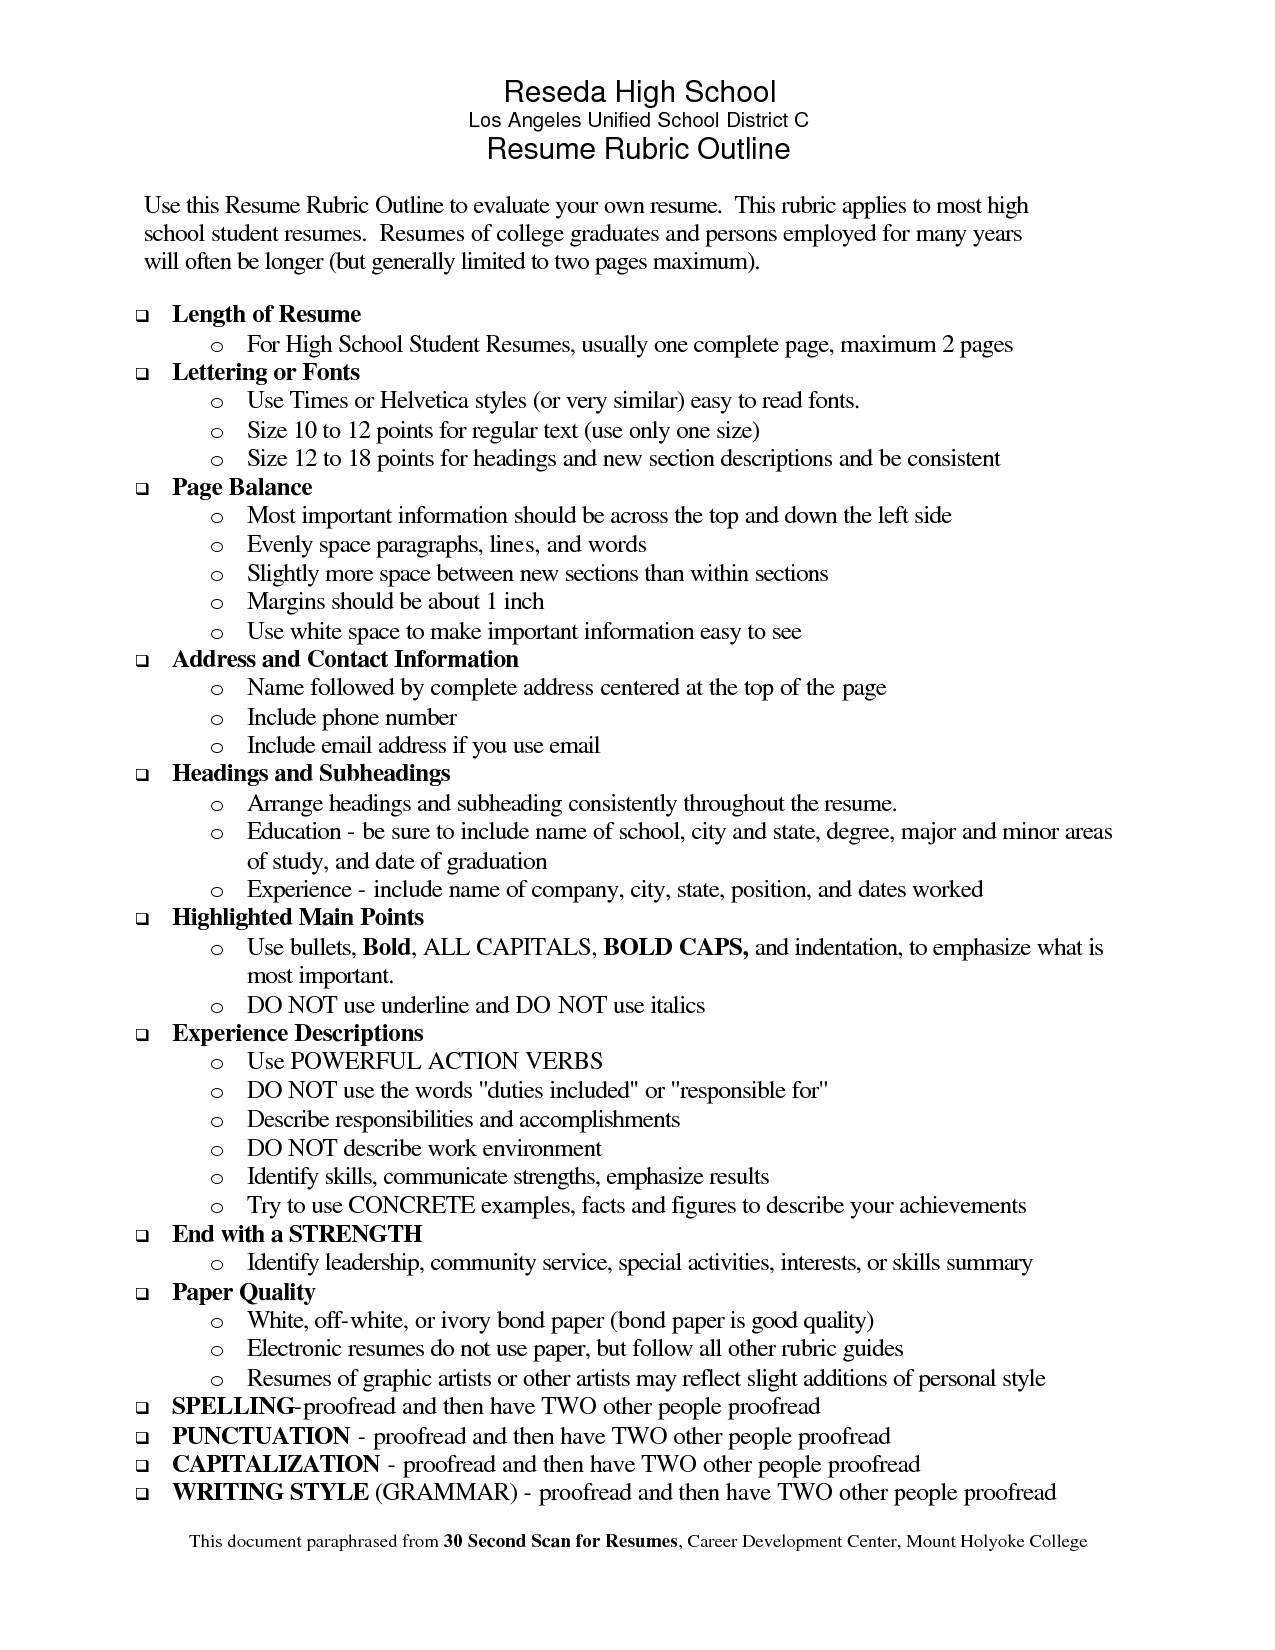 sample resume for high school students applying for scholarships